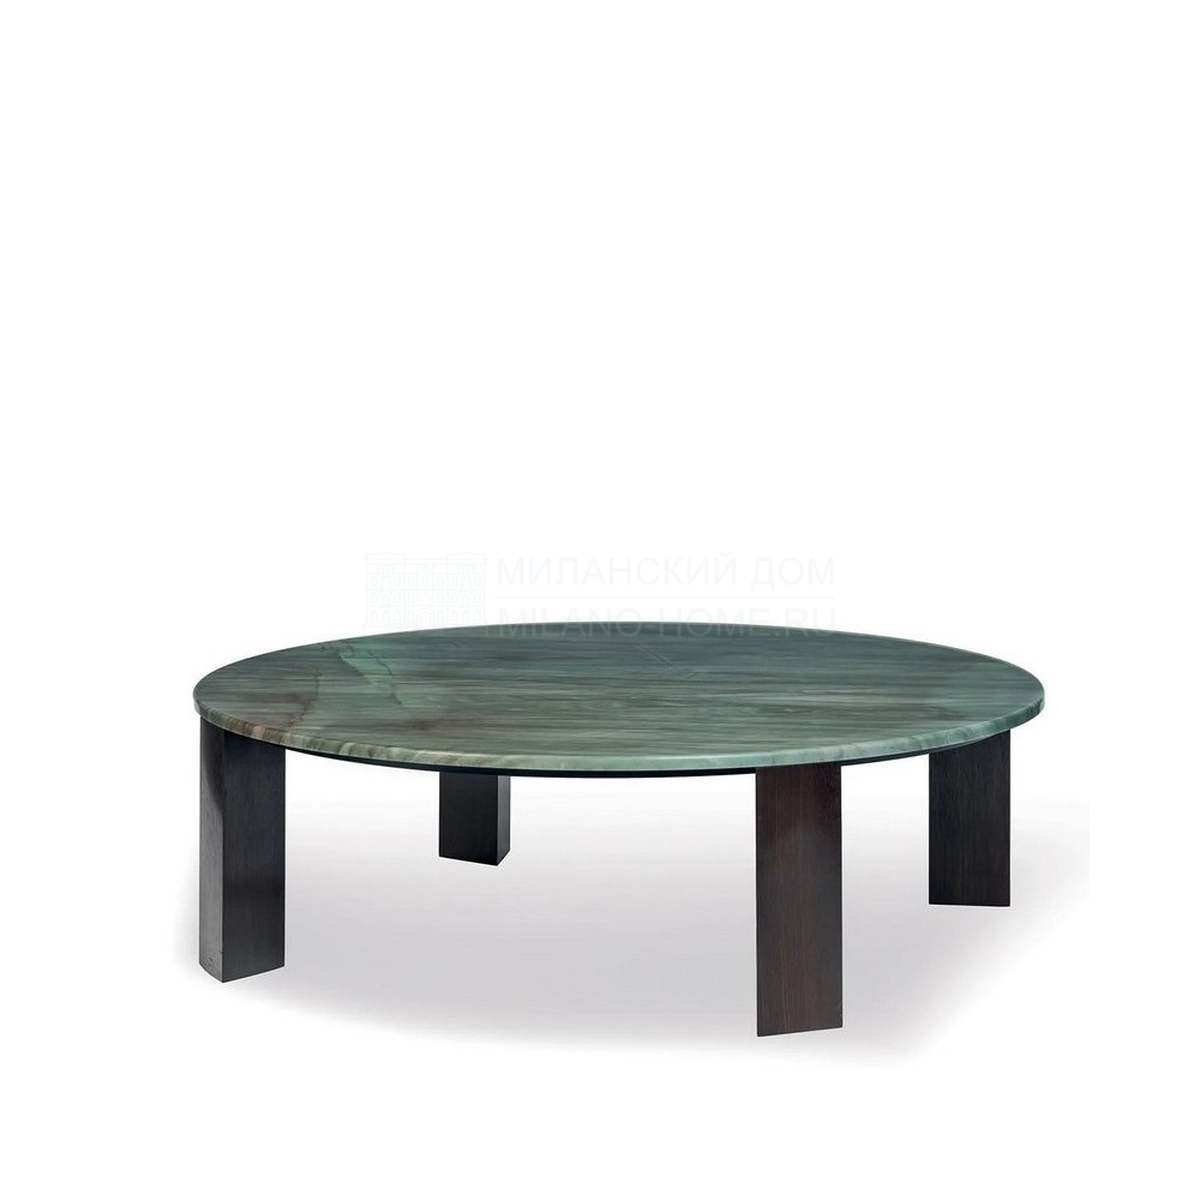 Кофейный столик Jingo small table из Италии фабрики ARMANI CASA